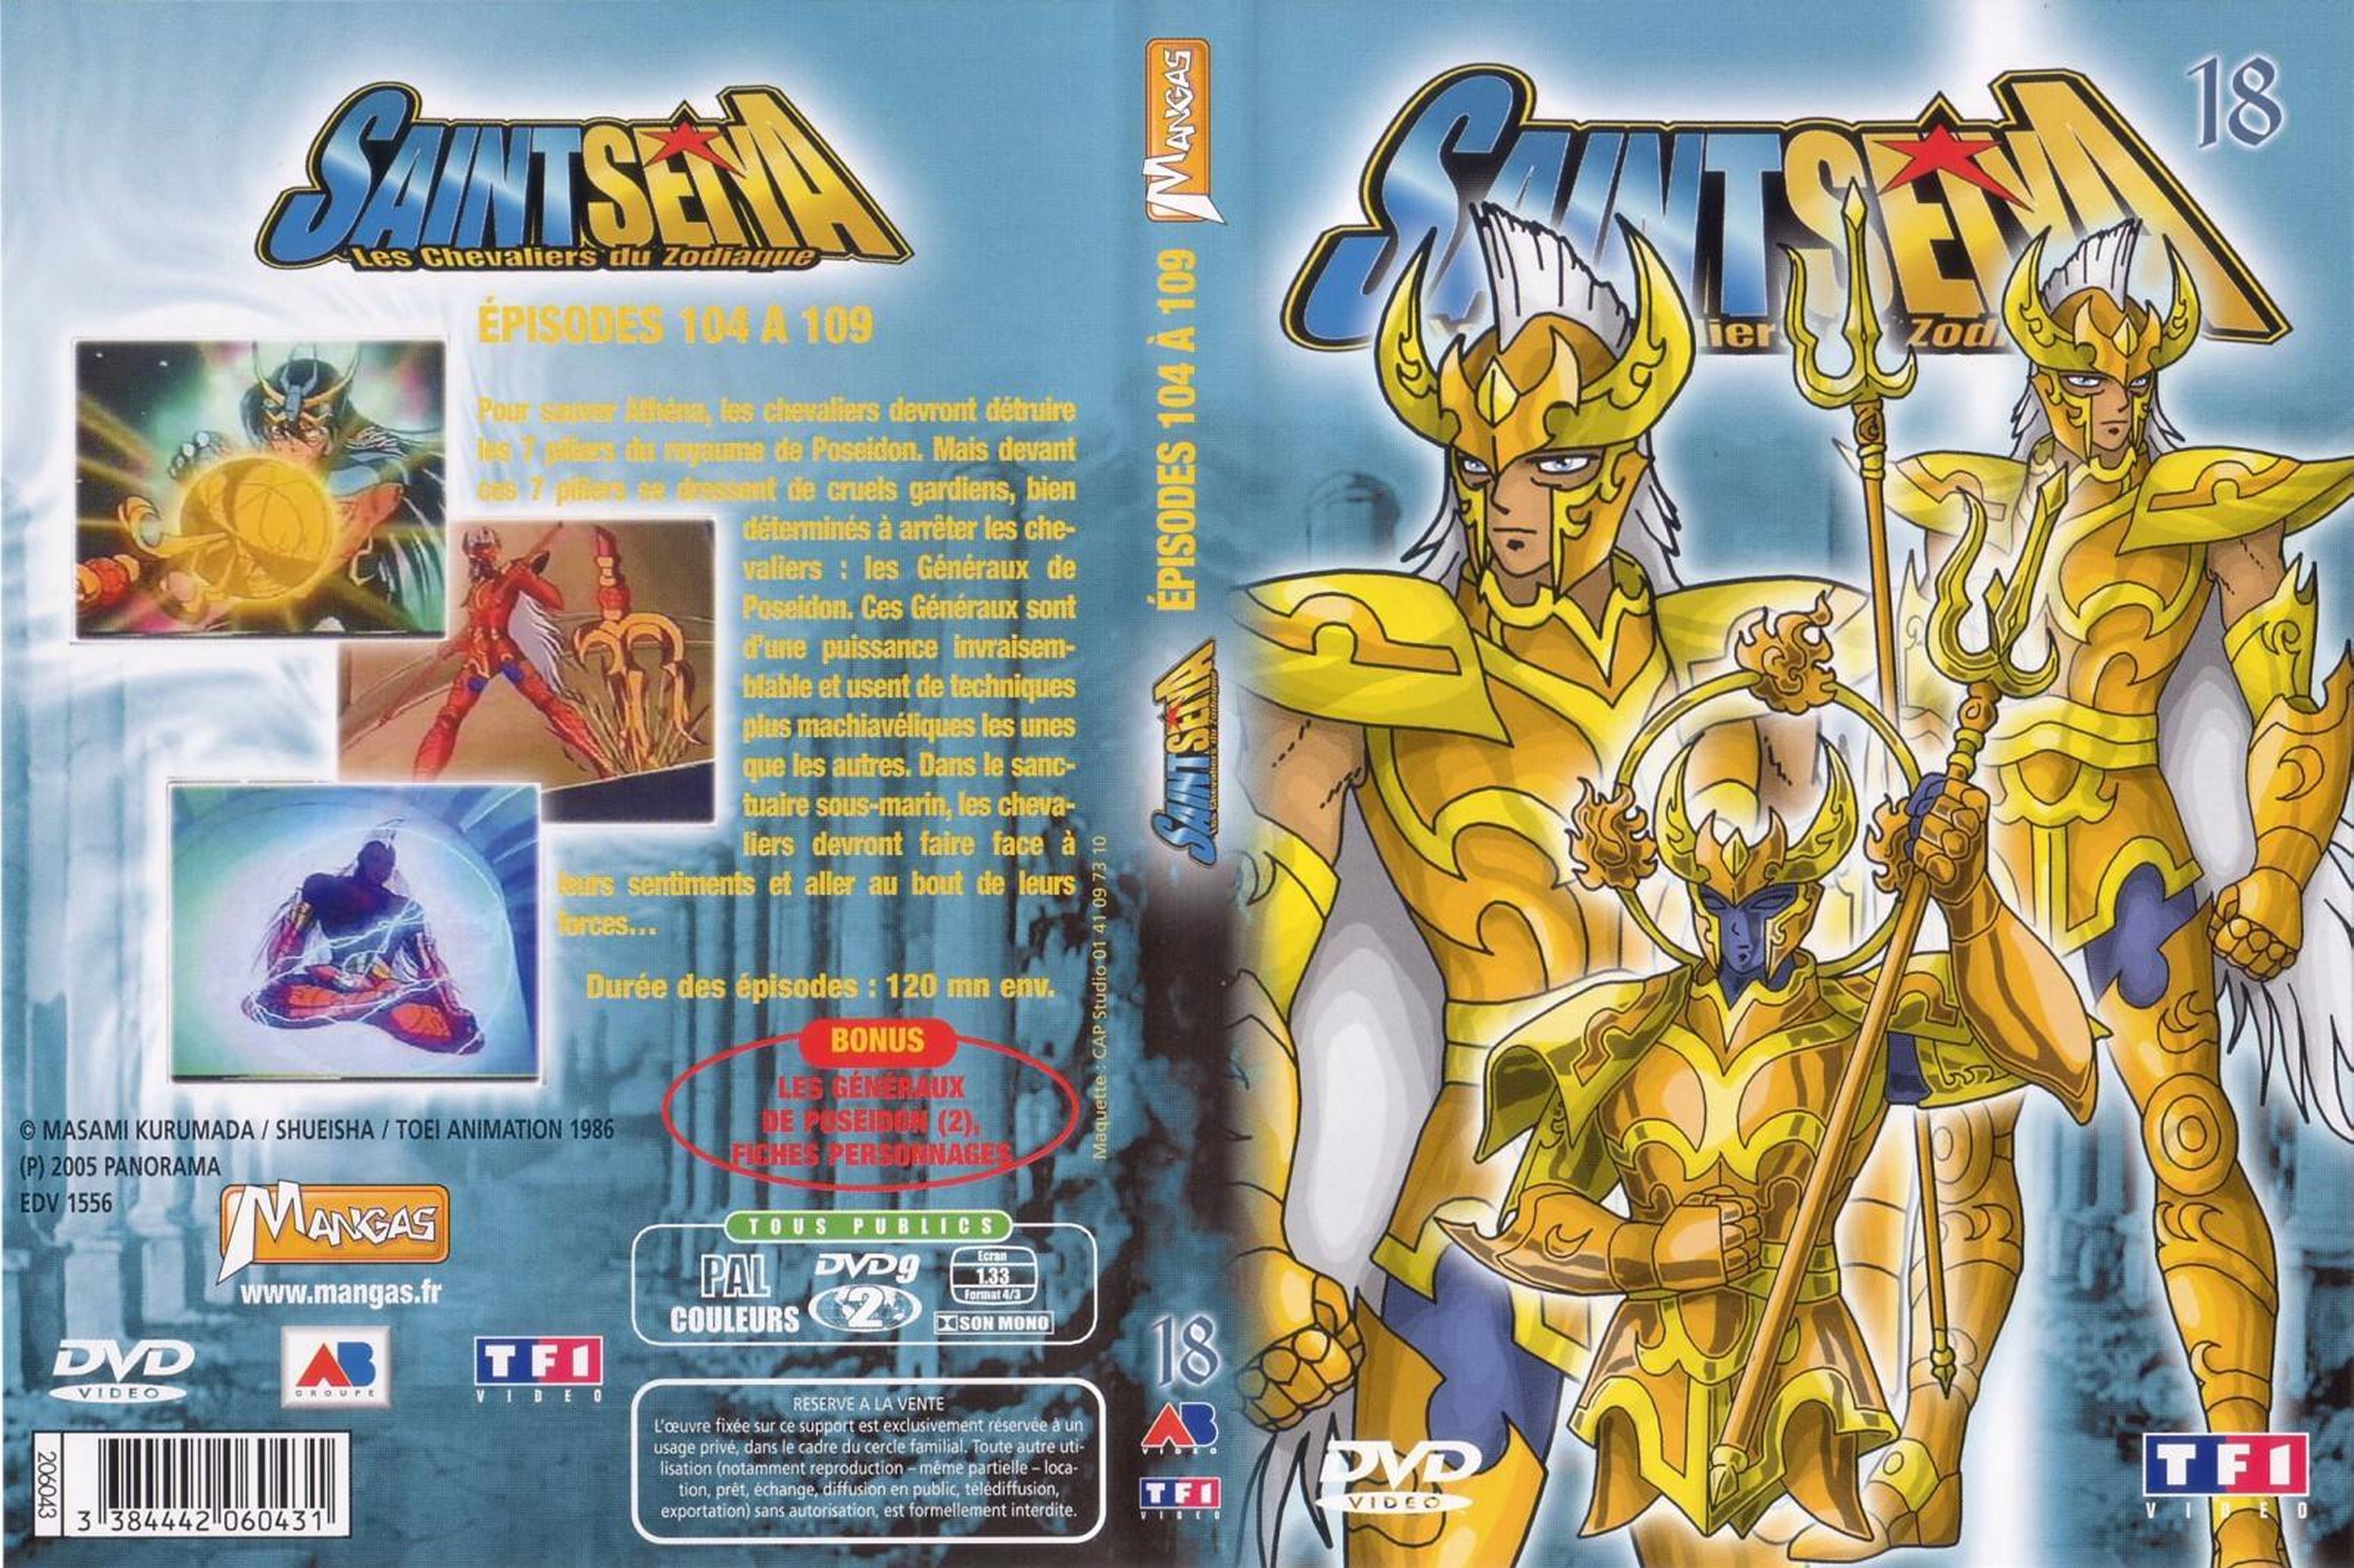 Jaquette DVD Saint Seiya vol 18